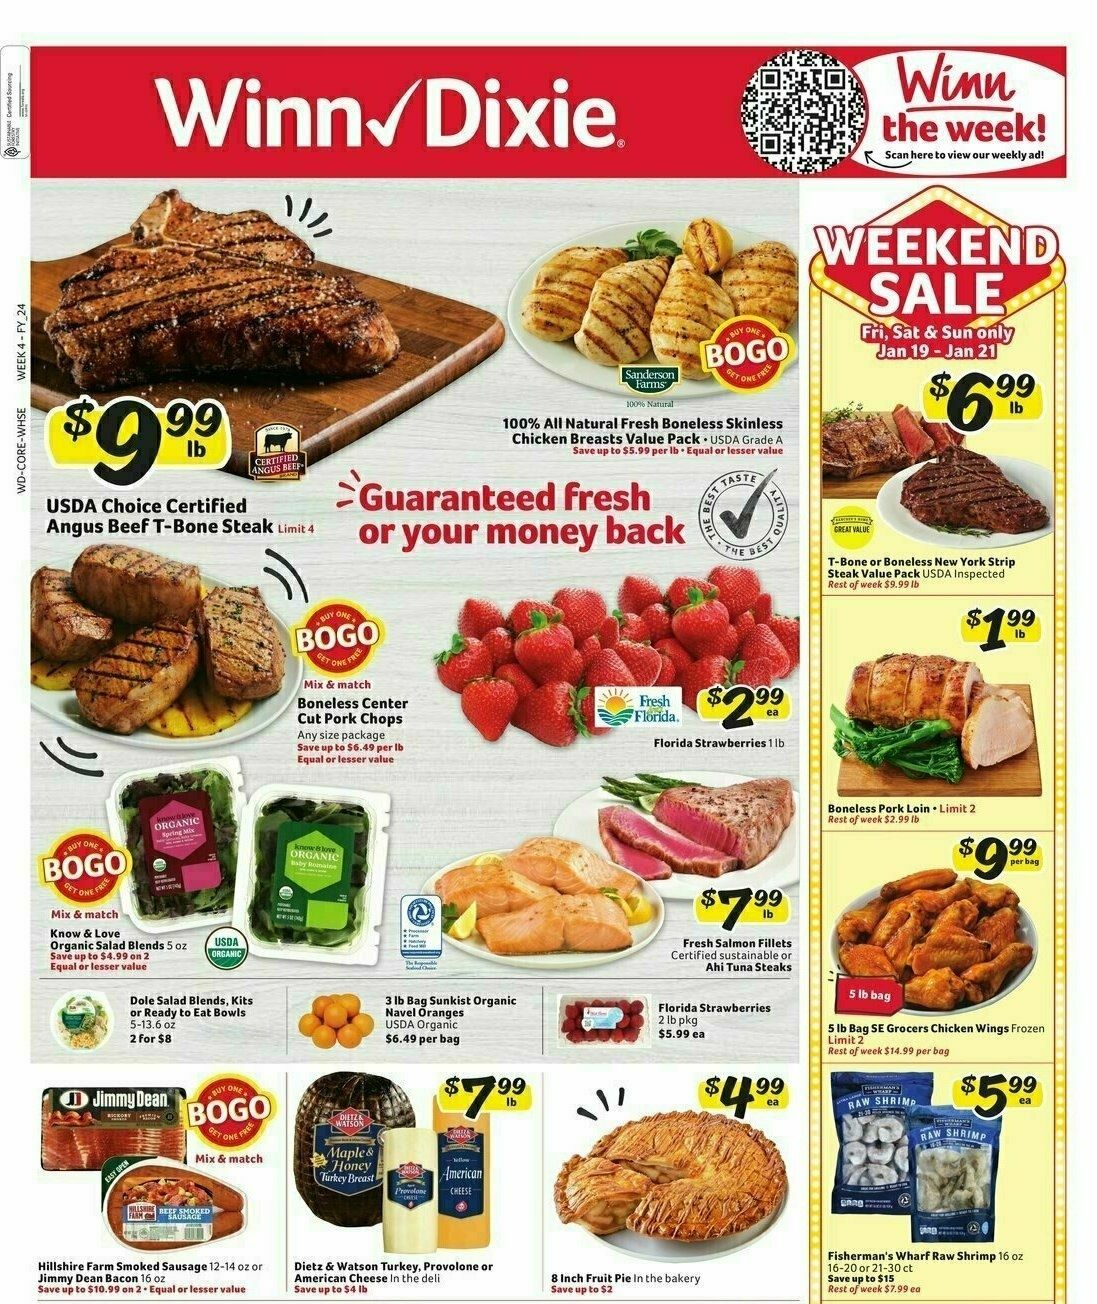 Winn-Dixie Weekly Ad from January 17